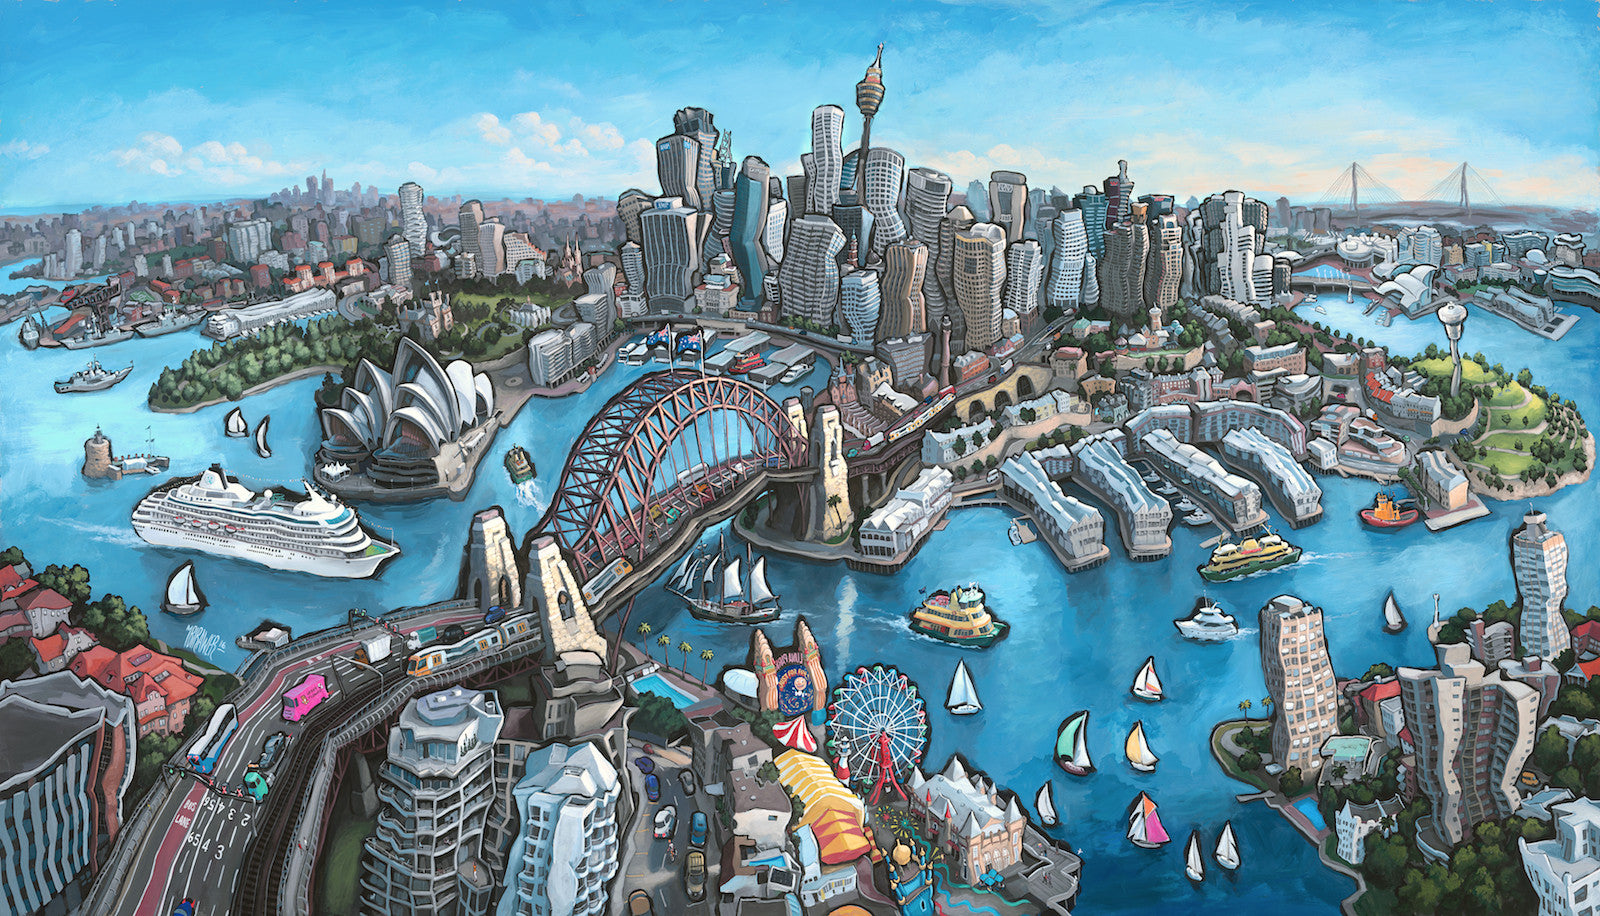 "Sydney, Australia" Commission Completed!